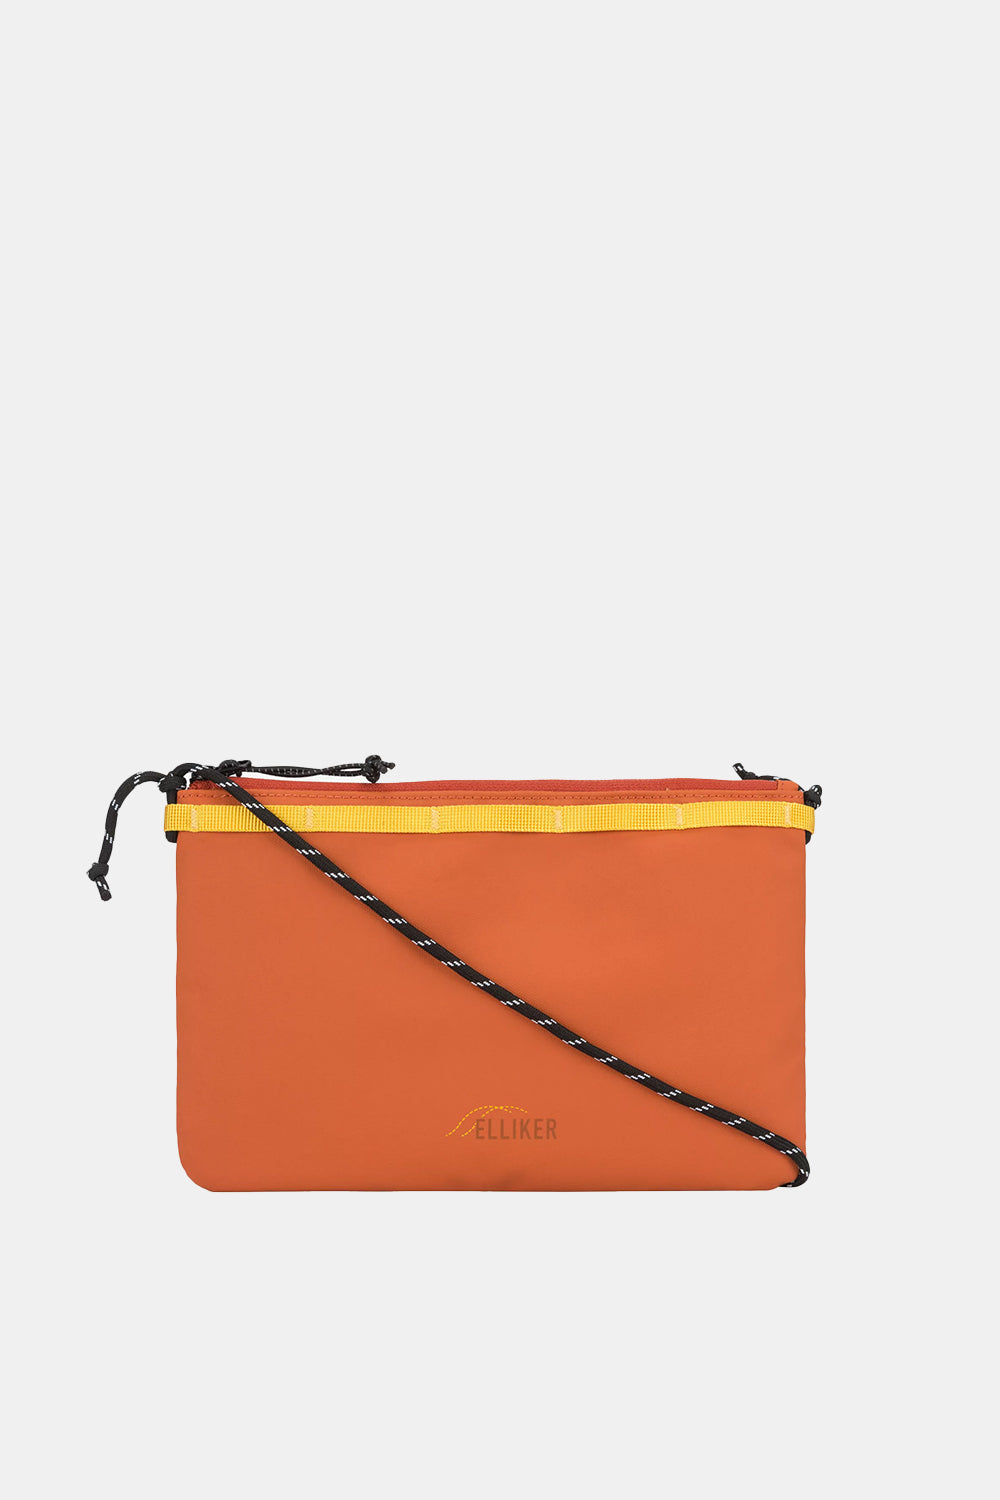 Elliker Hetchell Sacoche Bag 1L (Orange)
